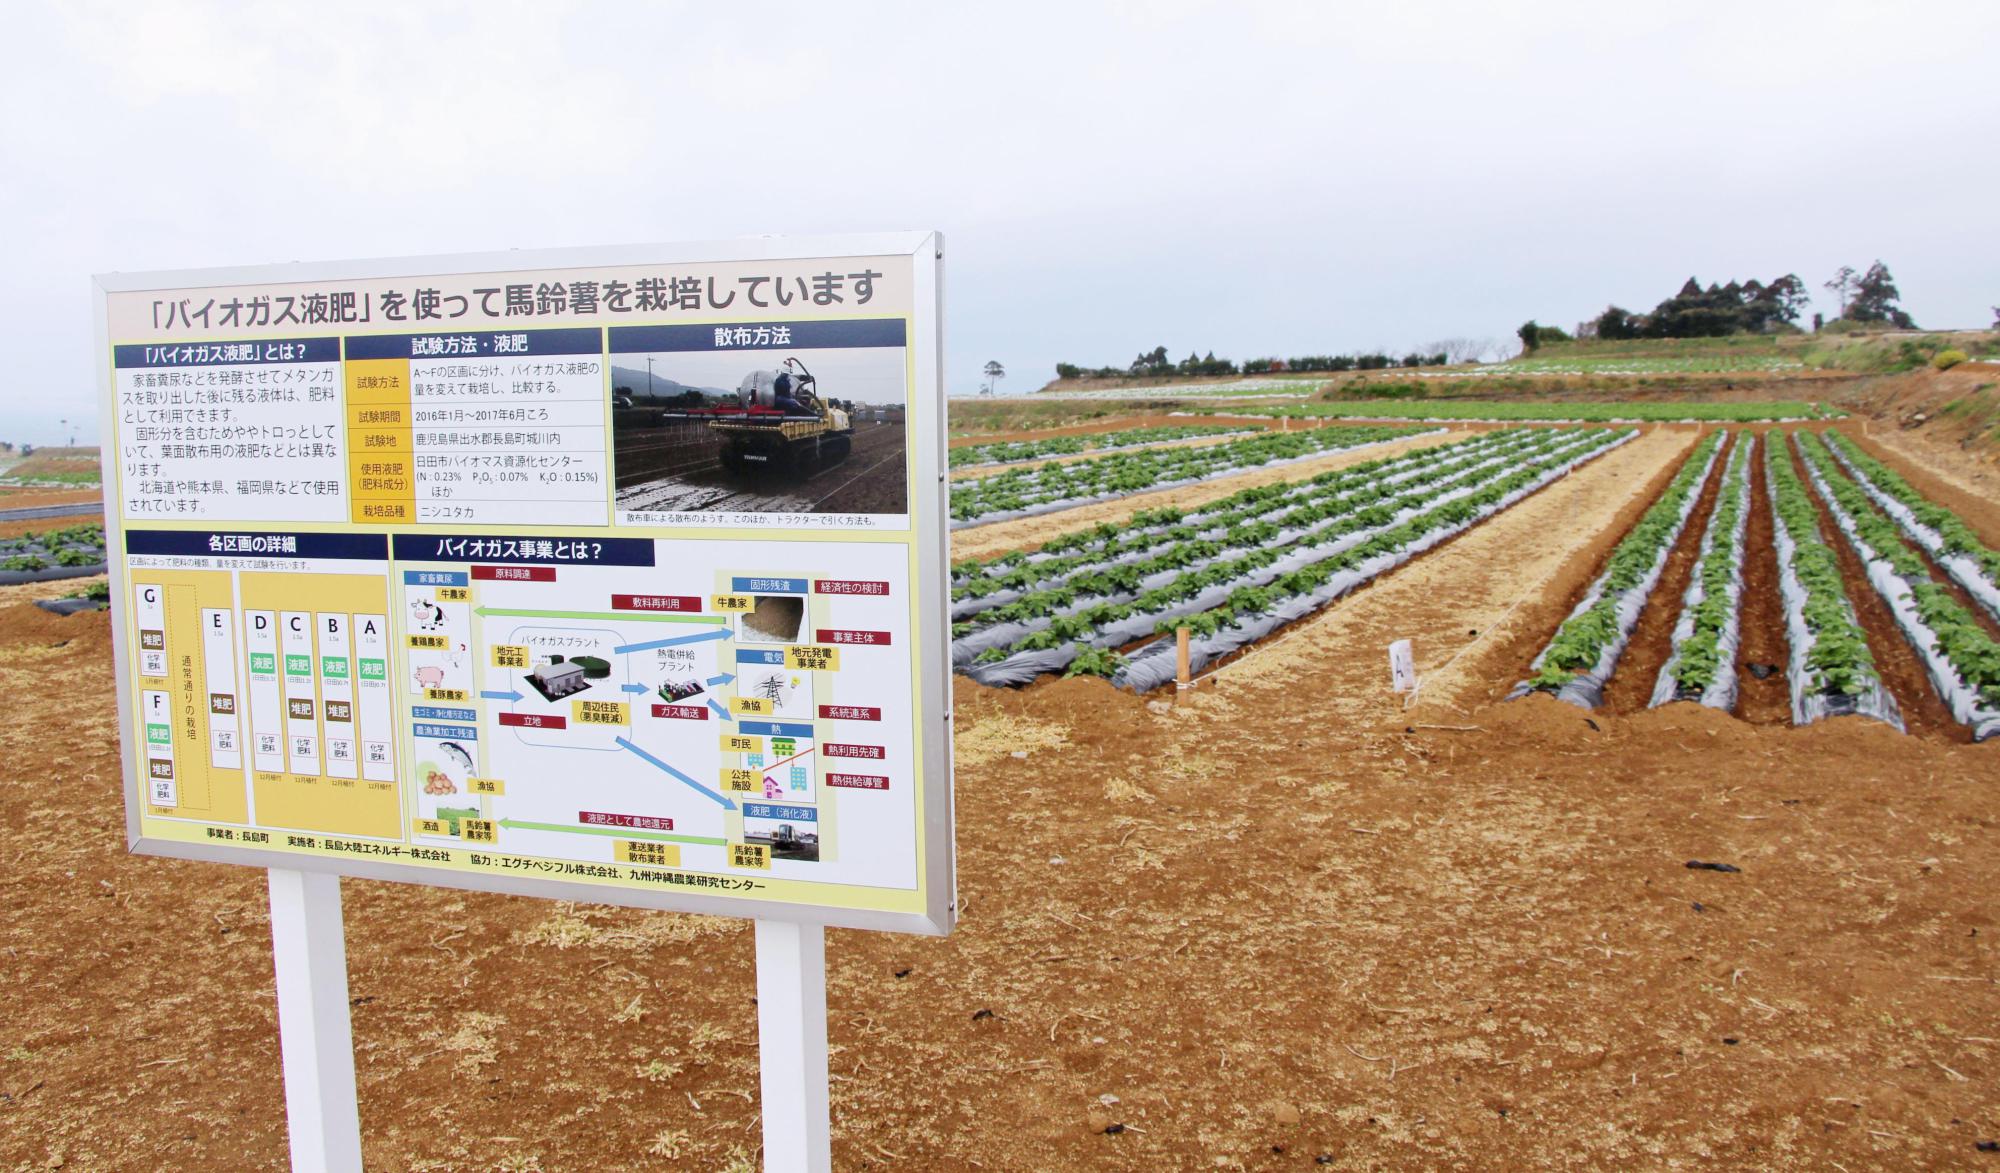 A potato field in Nagashima, Kagoshima Prefecture, uses liquid residues from a local biogas power plant as fertilizer. | KYODO